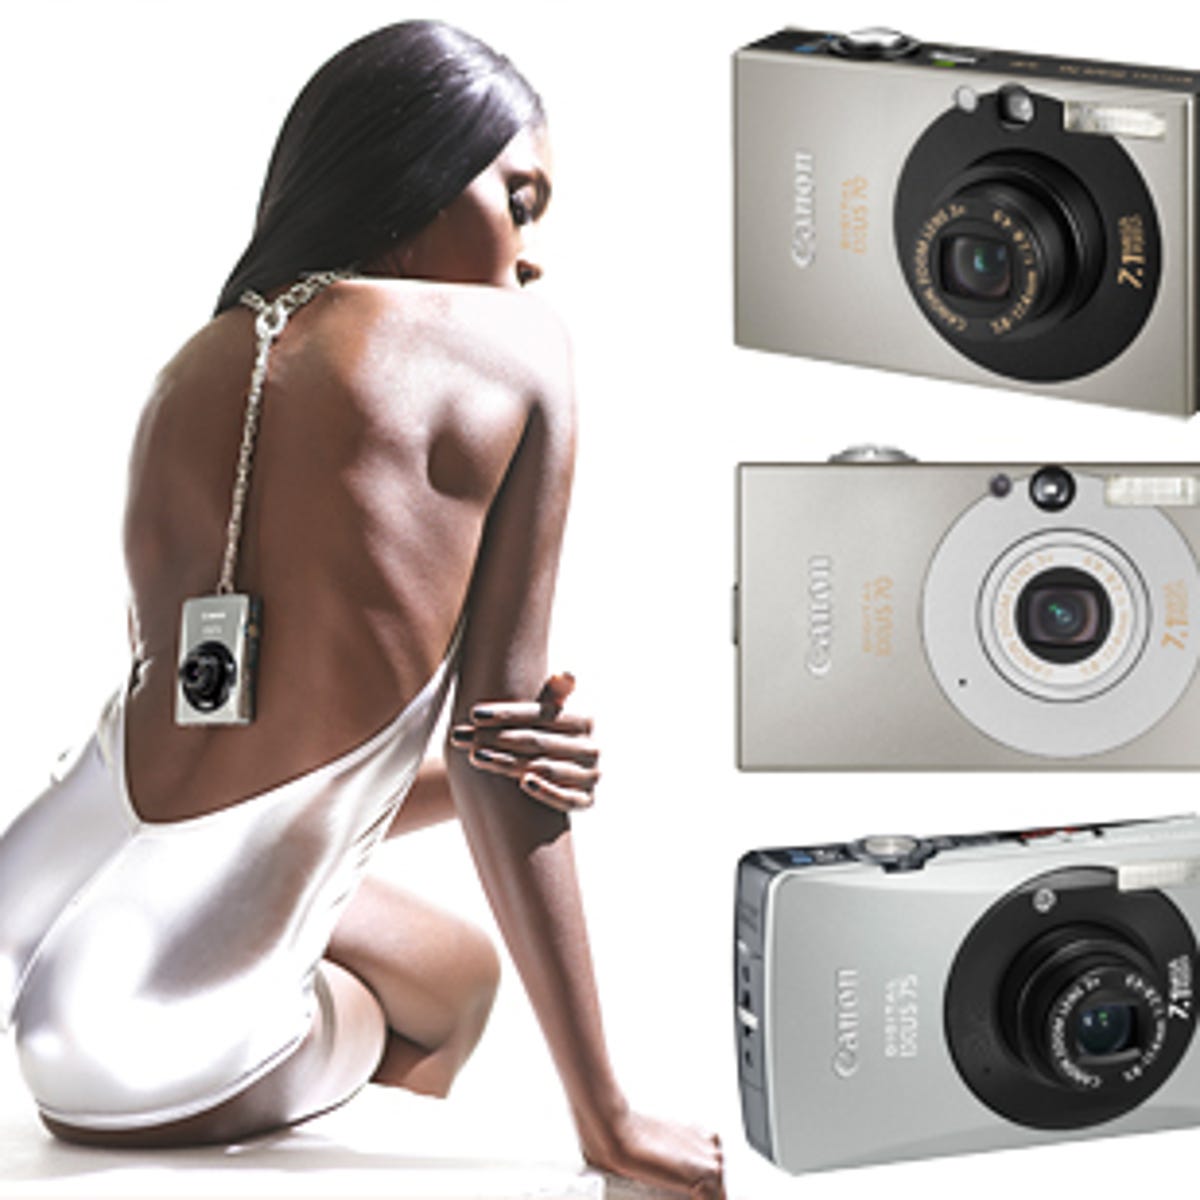 Canon Digital IXUS 70 and IXUS Classy compact cameras -